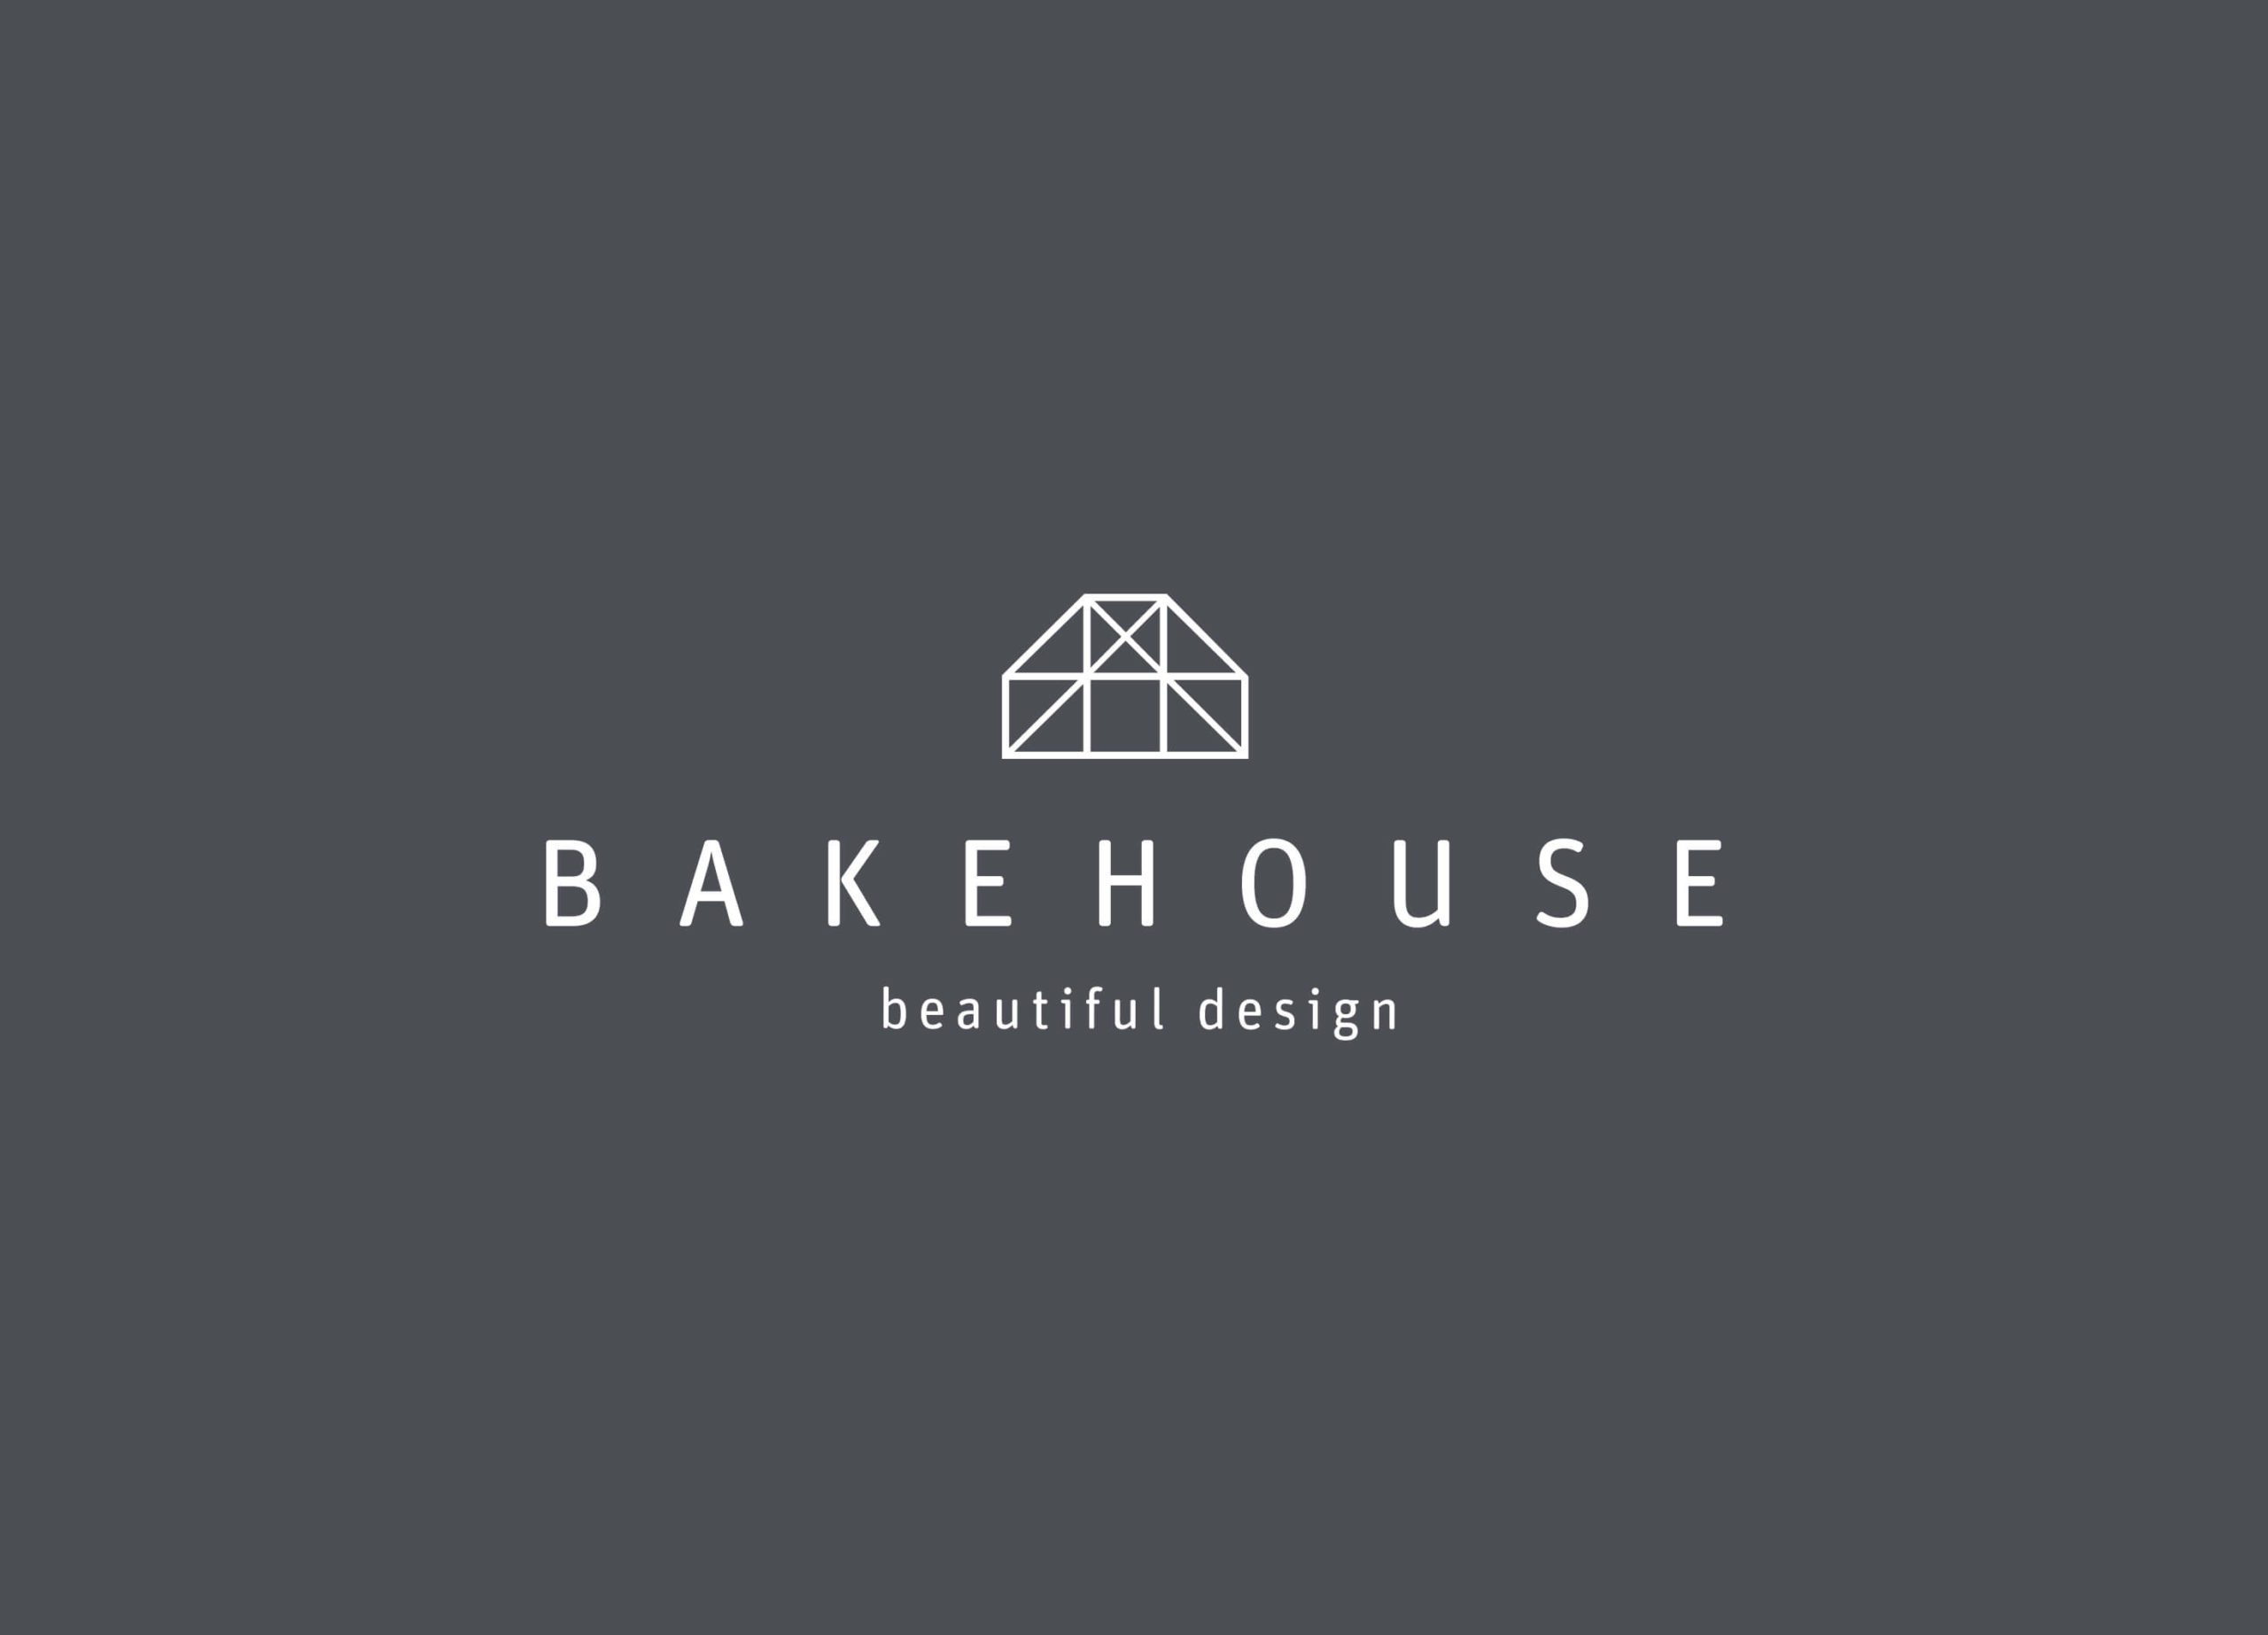 Primary Bakehouse Logo with White on Railway background